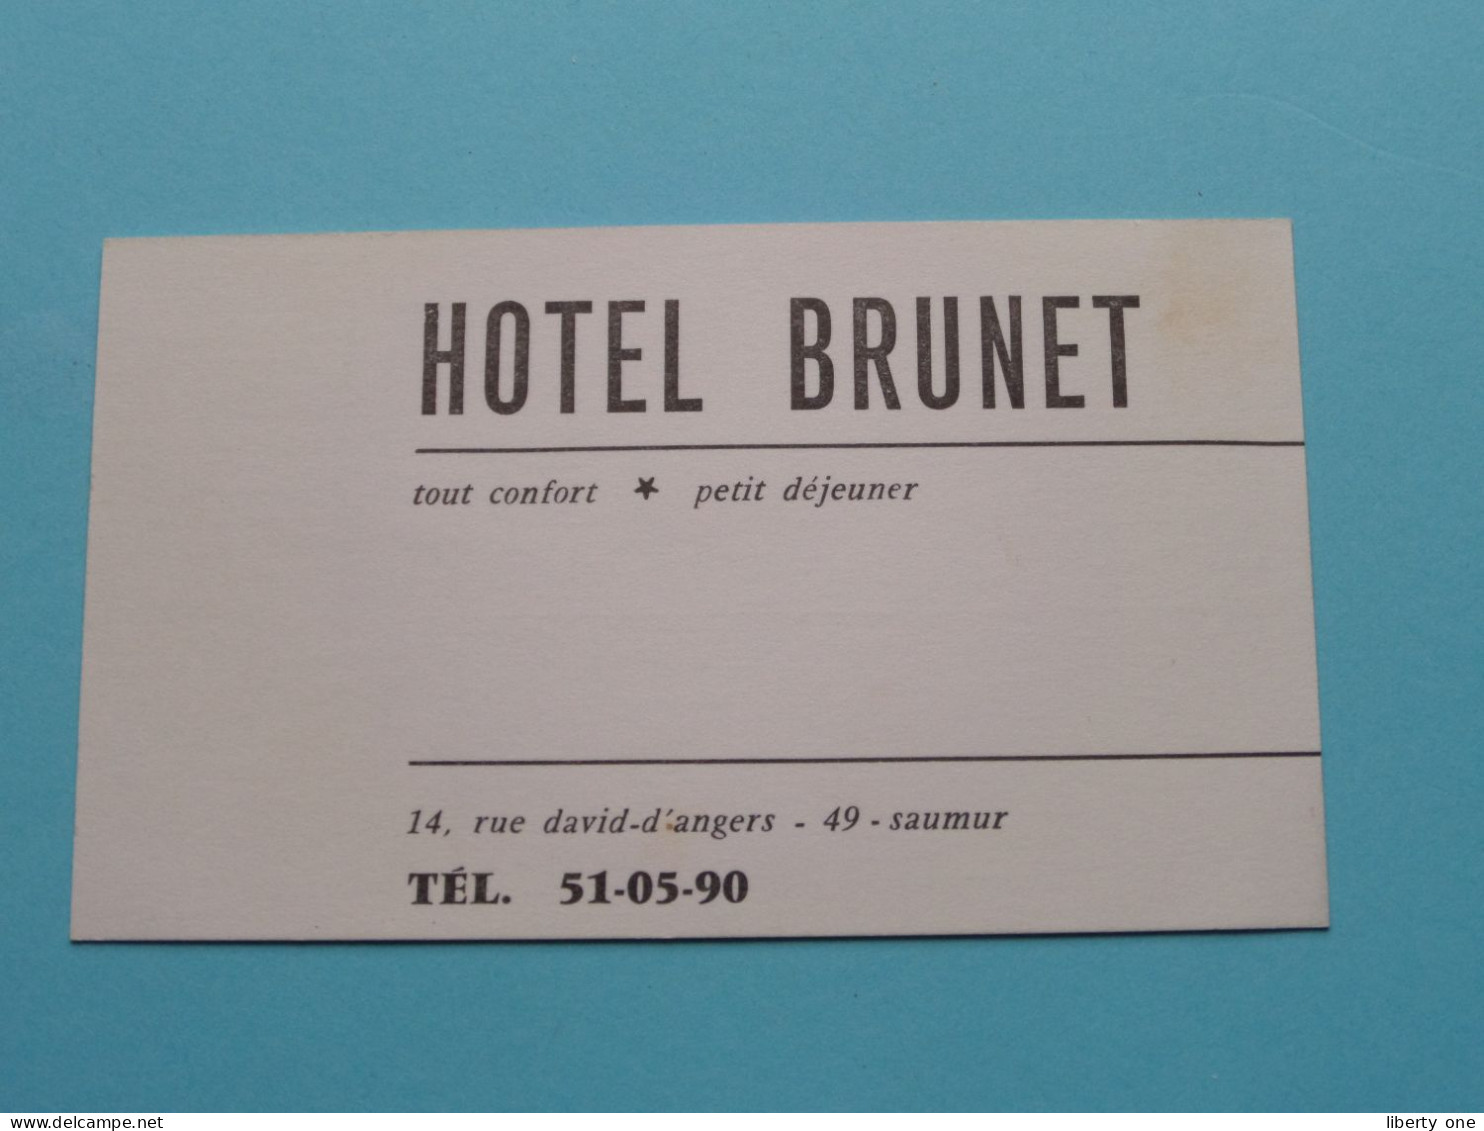 Hotel BRUNET > SAUMUR ( Zie / Voir SCAN ) La FRANCE ! - Visitenkarten